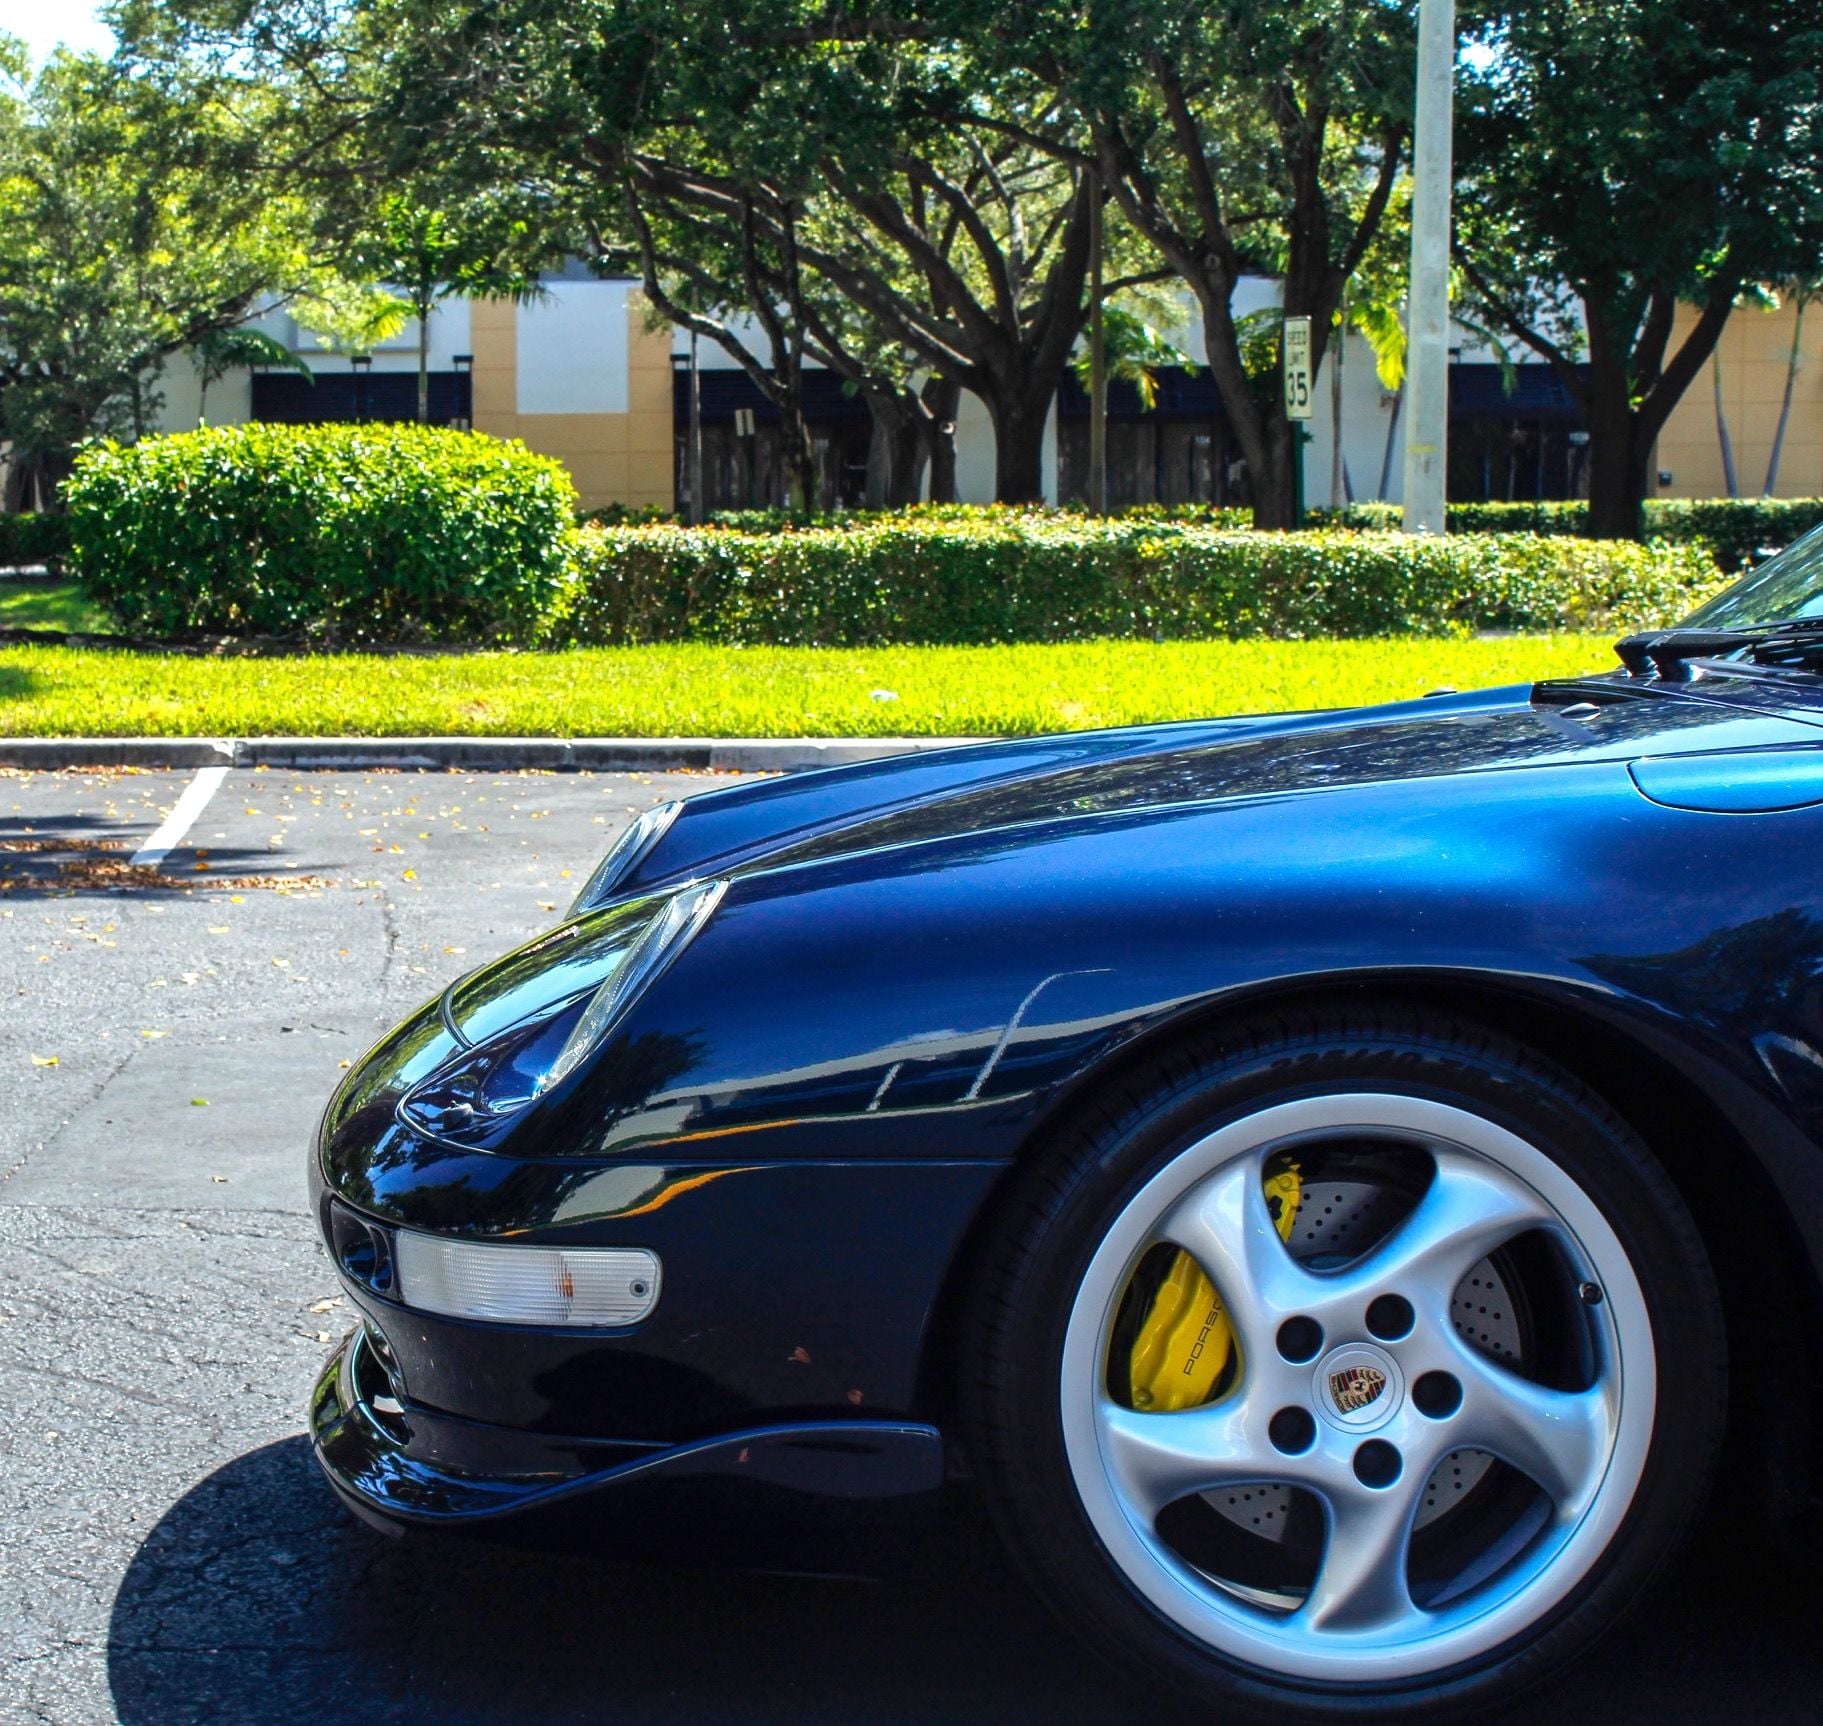 1997 Porsche 911 - 1997 993 Turbo  Special Wishes X50 RARE - Used - VIN WP0ZZZ99ZVS370087 - 14,500 Miles - Boca Raton, FL 33431, United States